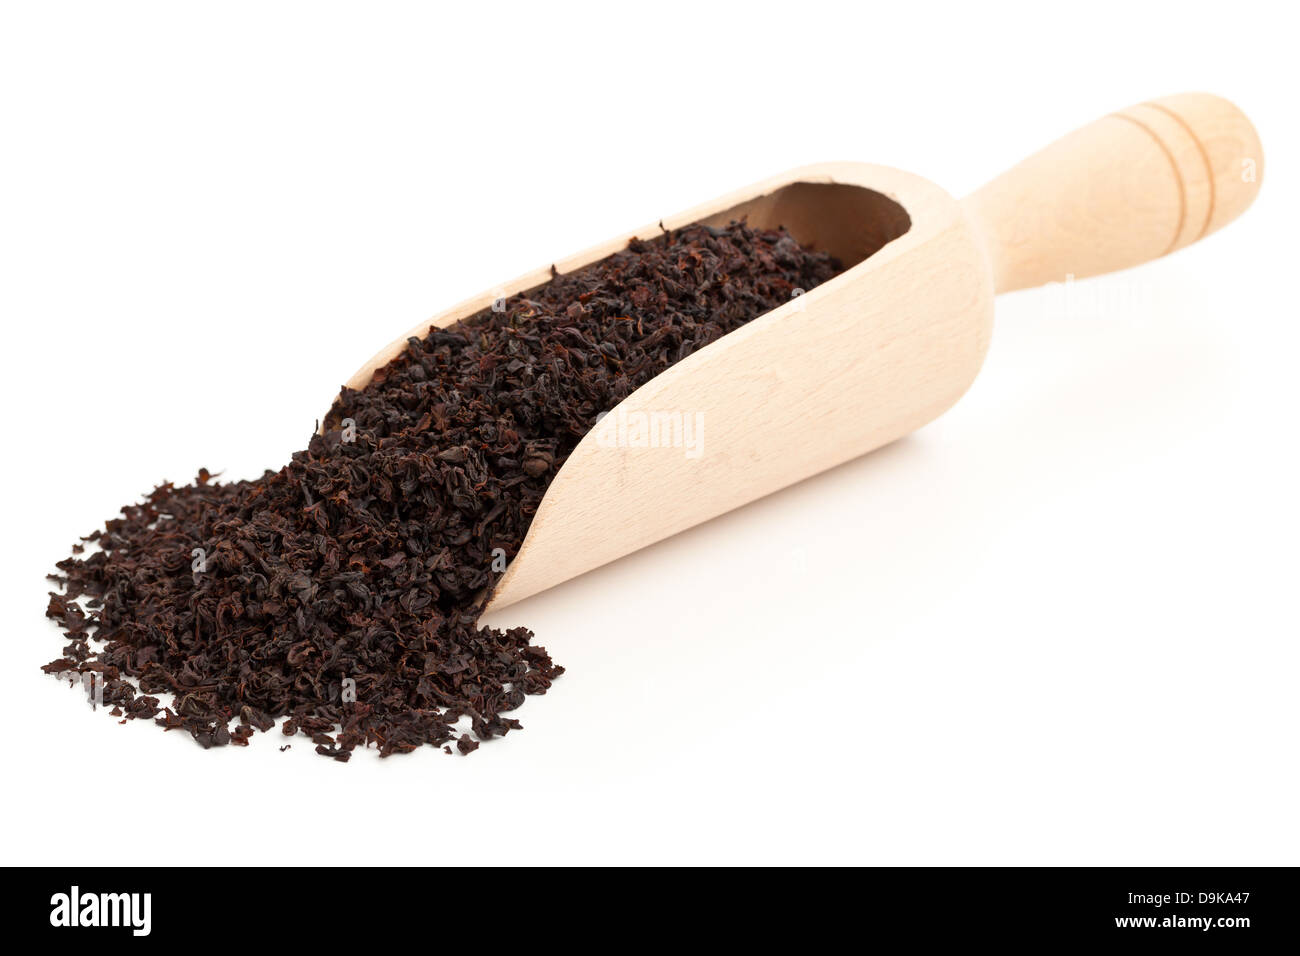 Ceylon black tea crop in wooden scoop over white background Stock Photo